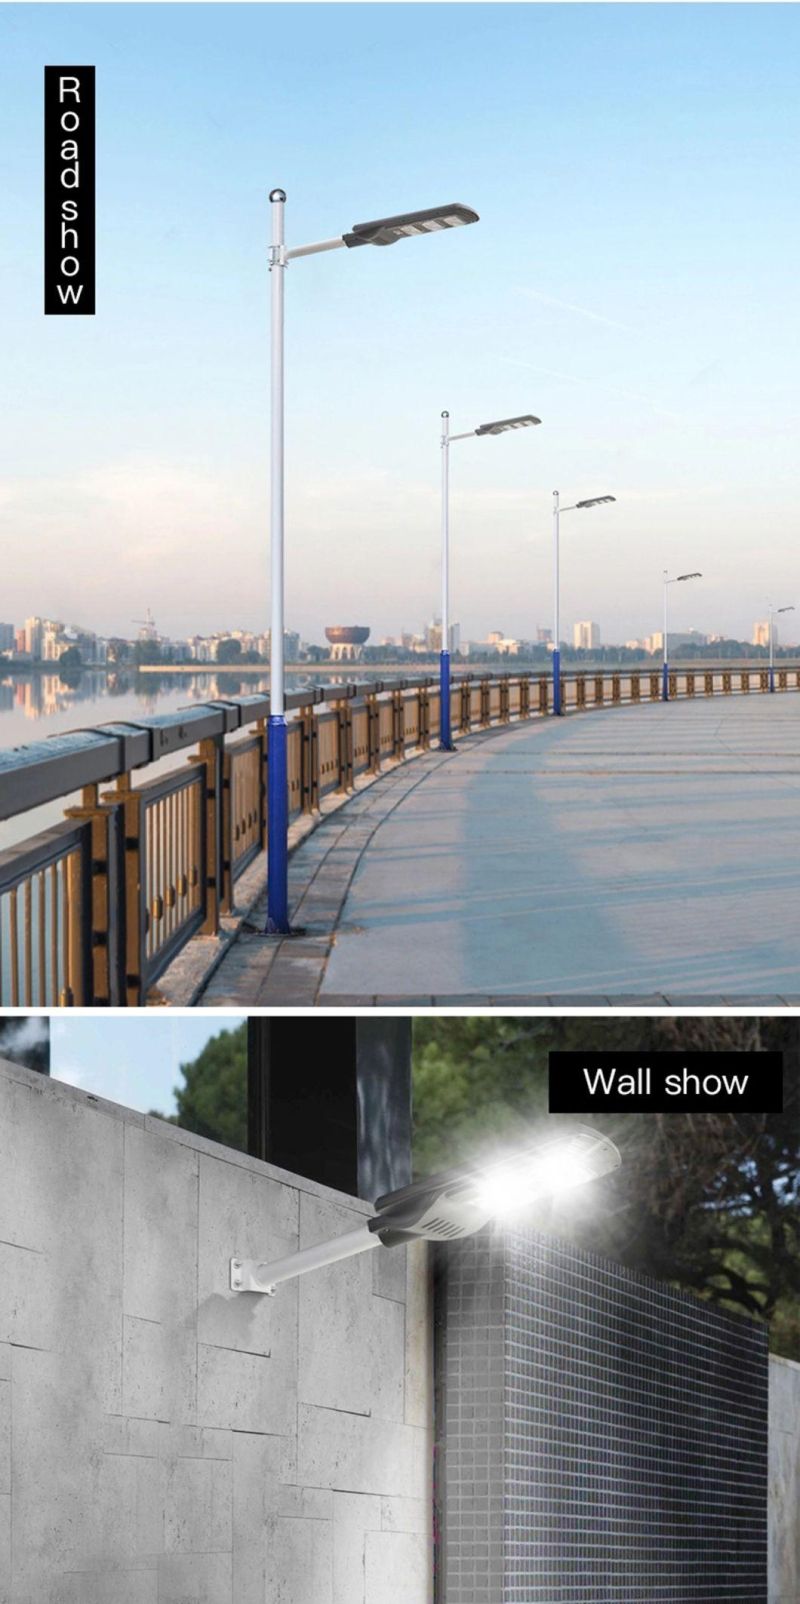 Best Sale China Supplier Waterproof Outdoor New Premium Motion Sensor Light Emergency Outdoor LED Solar Light